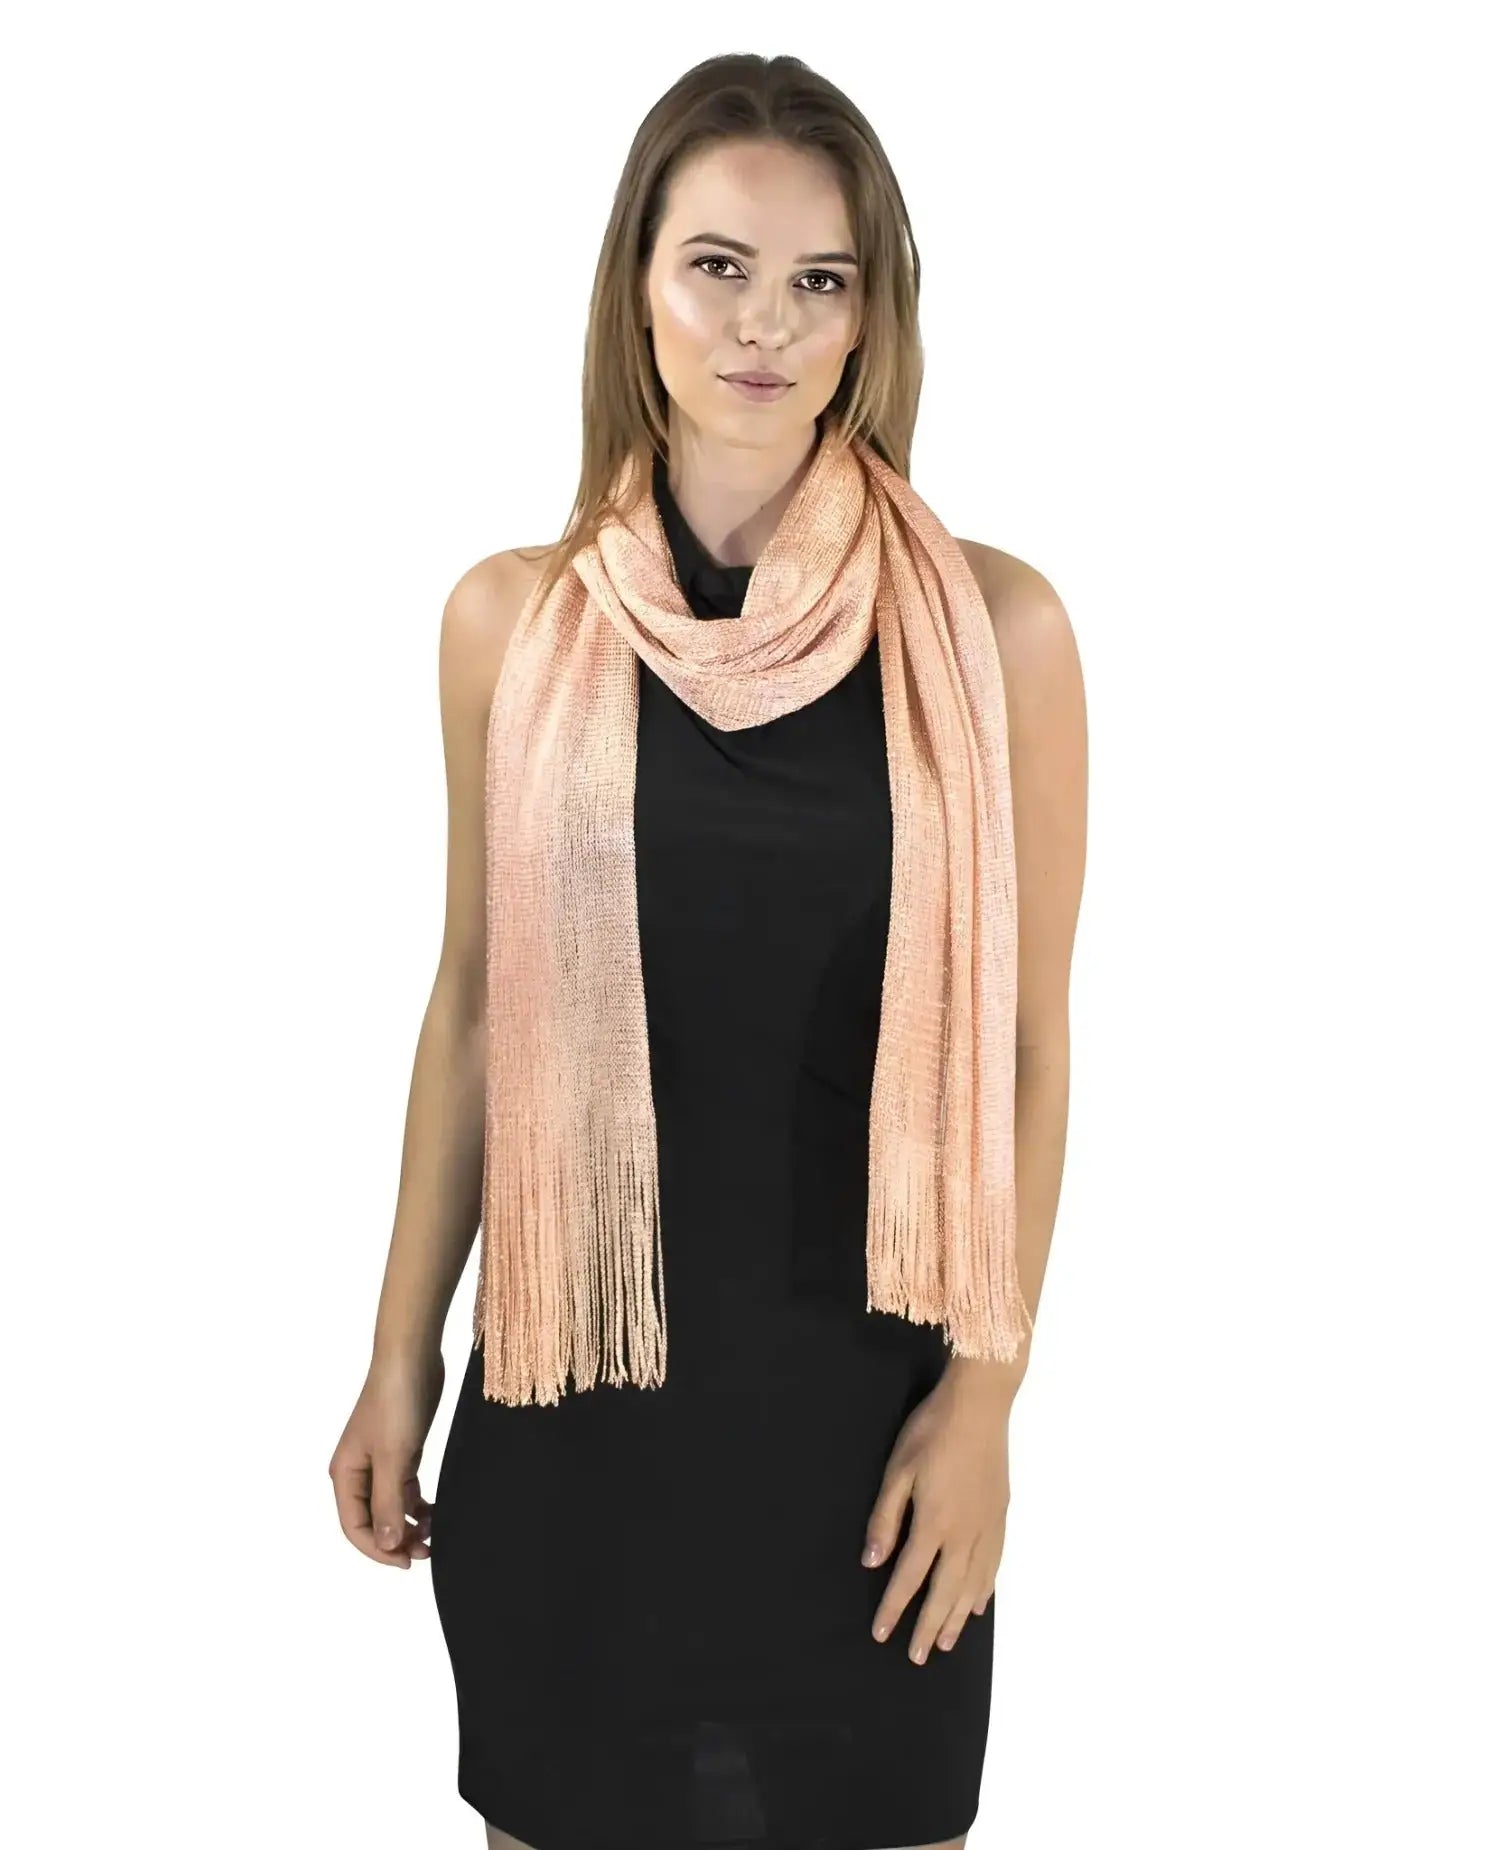 Shimmering lurex fishnet evening shawl scarf worn by woman in pink